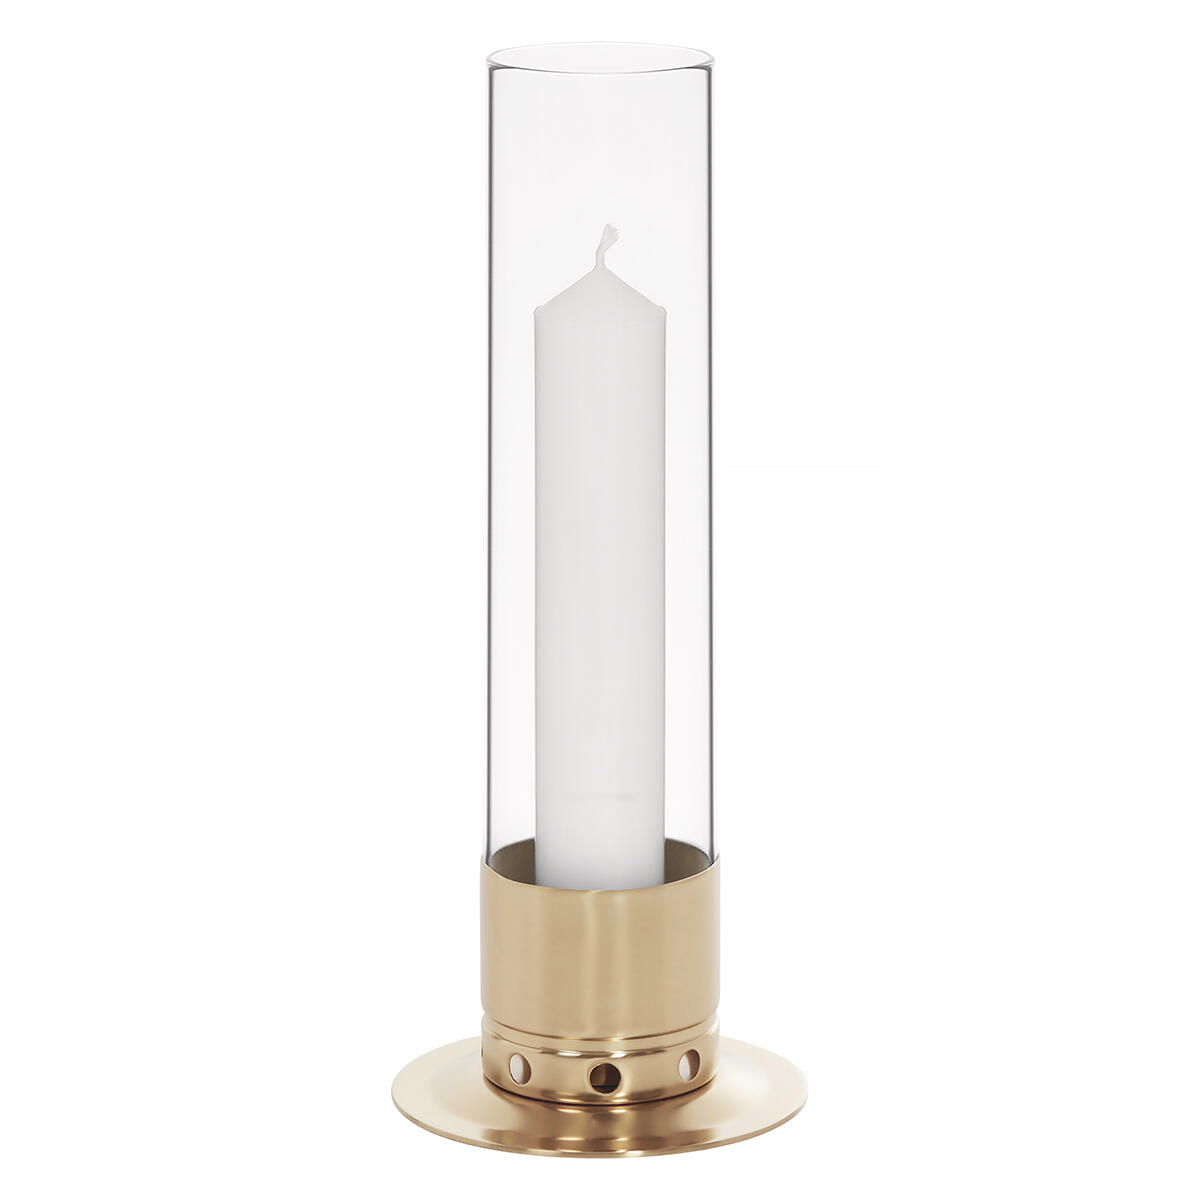 Avocadostore - & Kattvik LARGE | Design - Design Windlicht Kattvik Glas aus - Edelstahl -